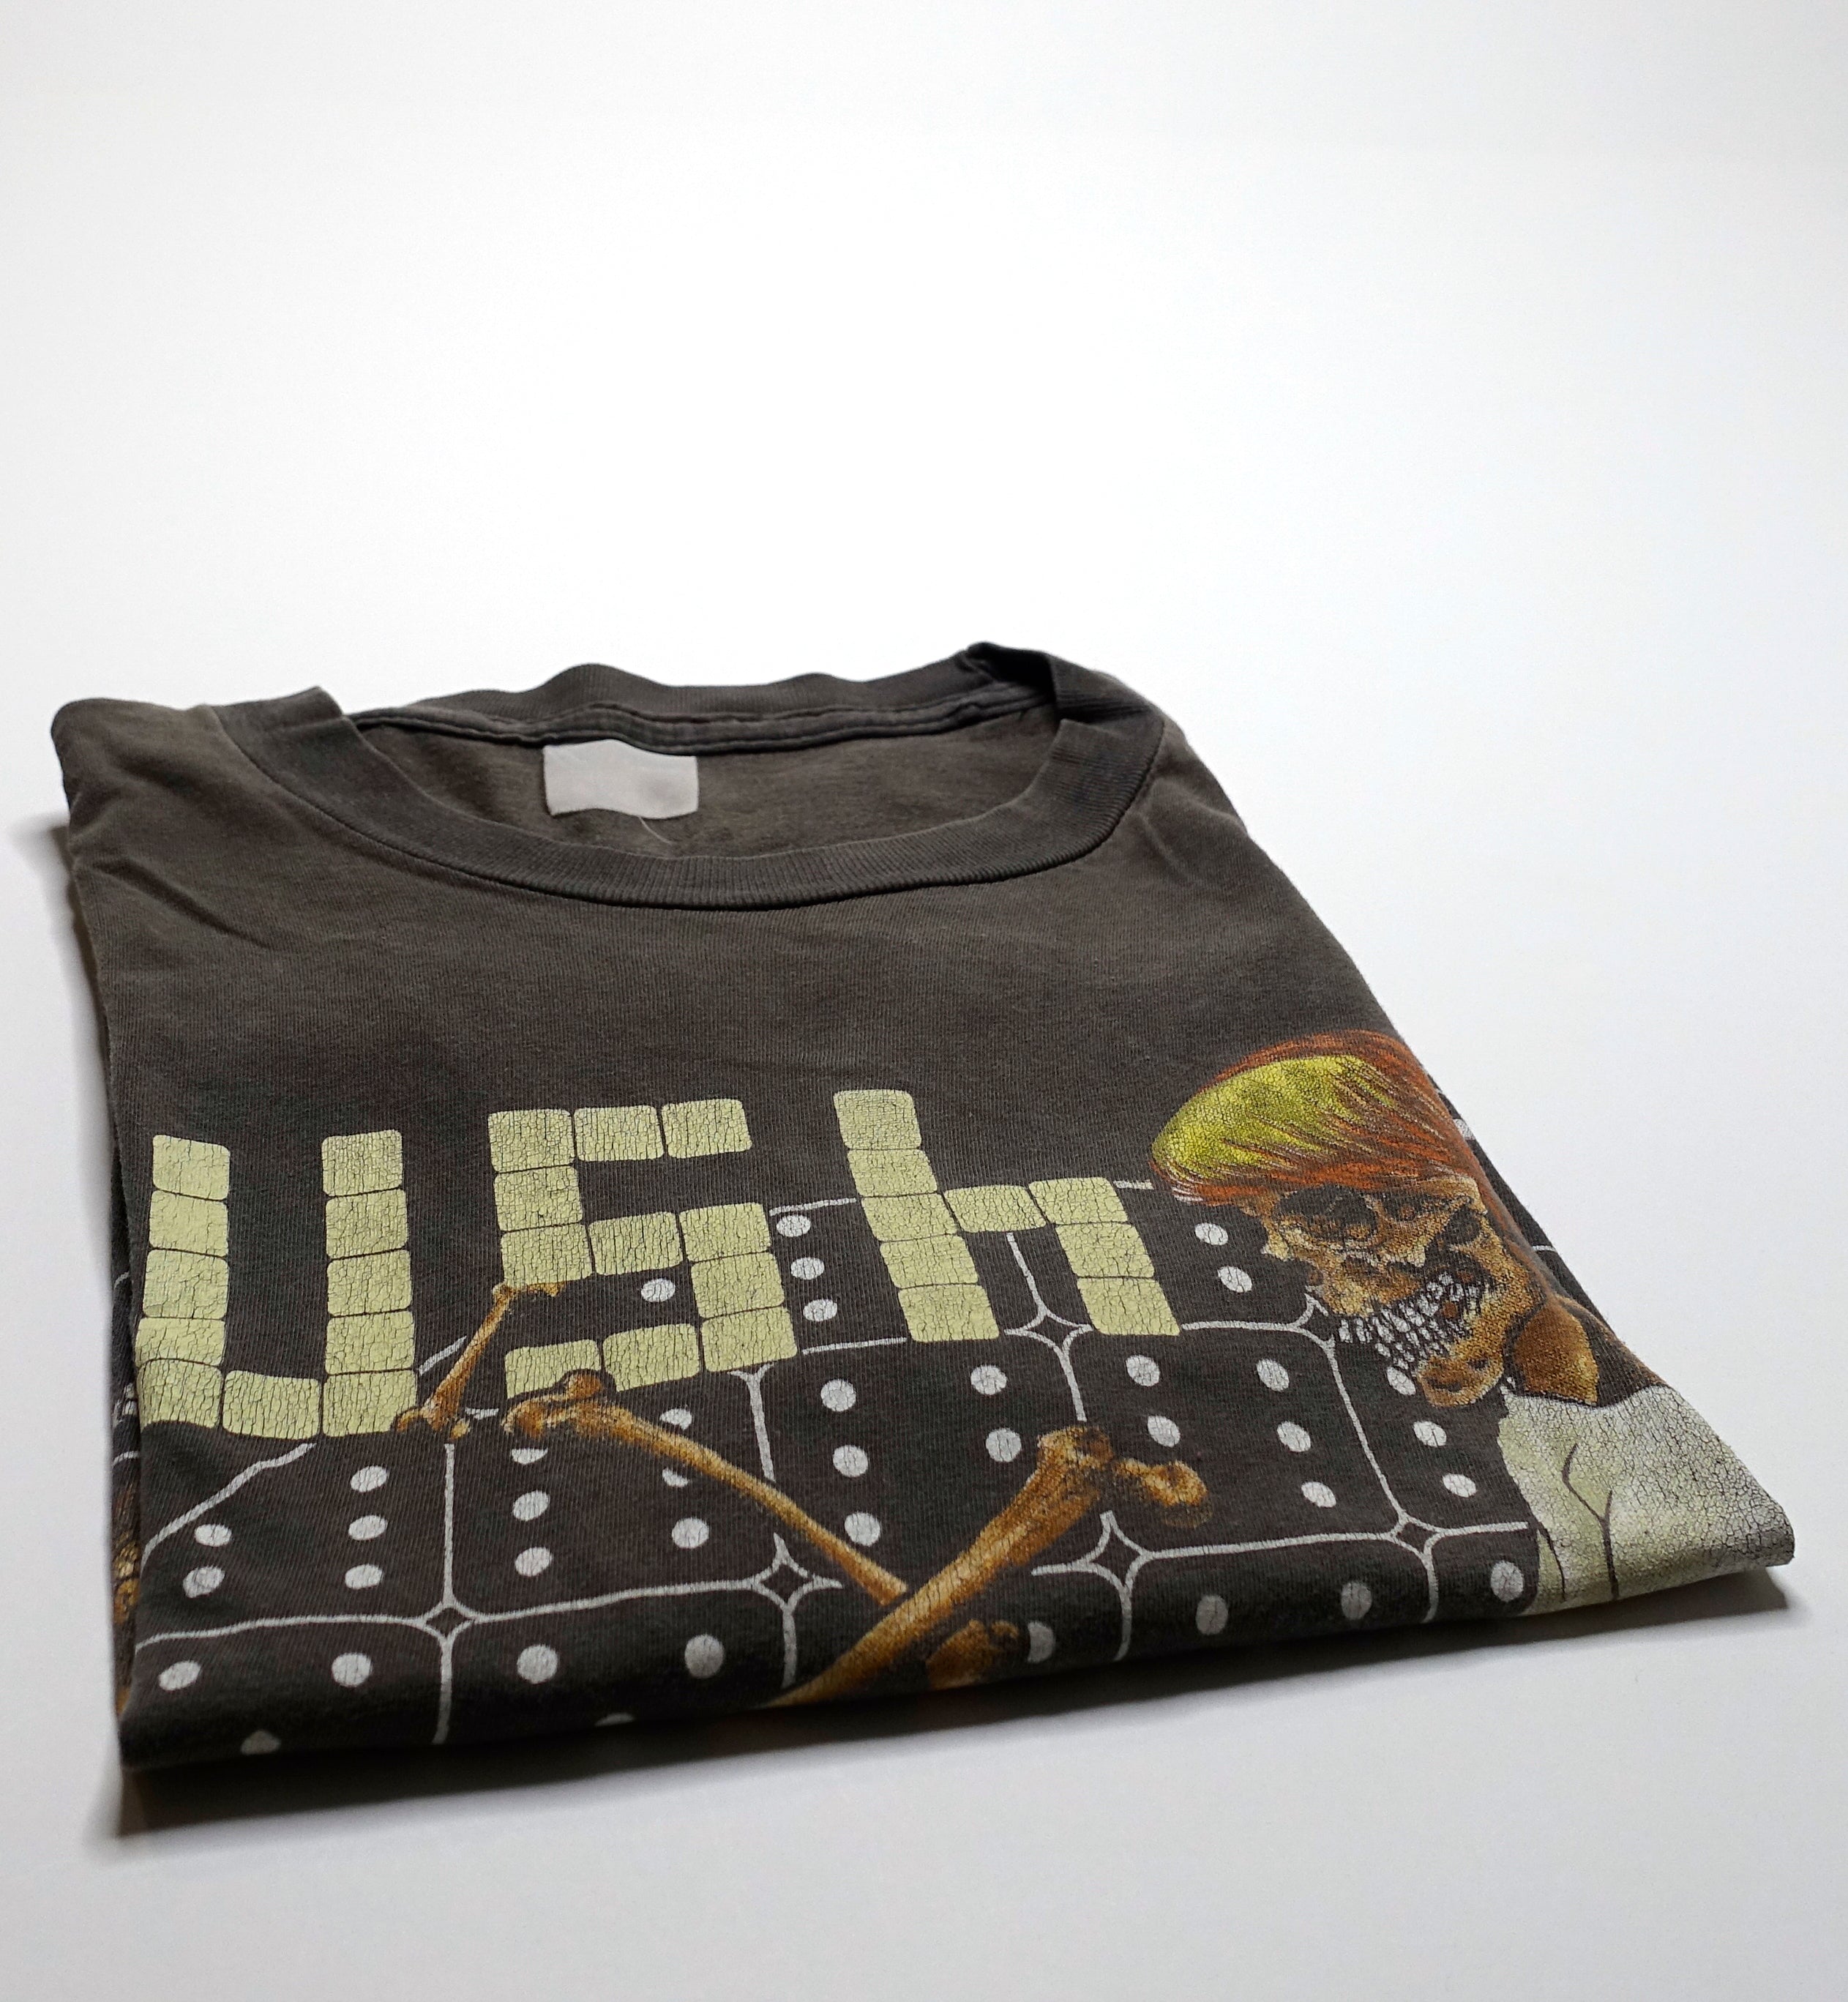 Rush - Roll The Bones 1991 European Tour Shirt Size XL (Pushead Design)